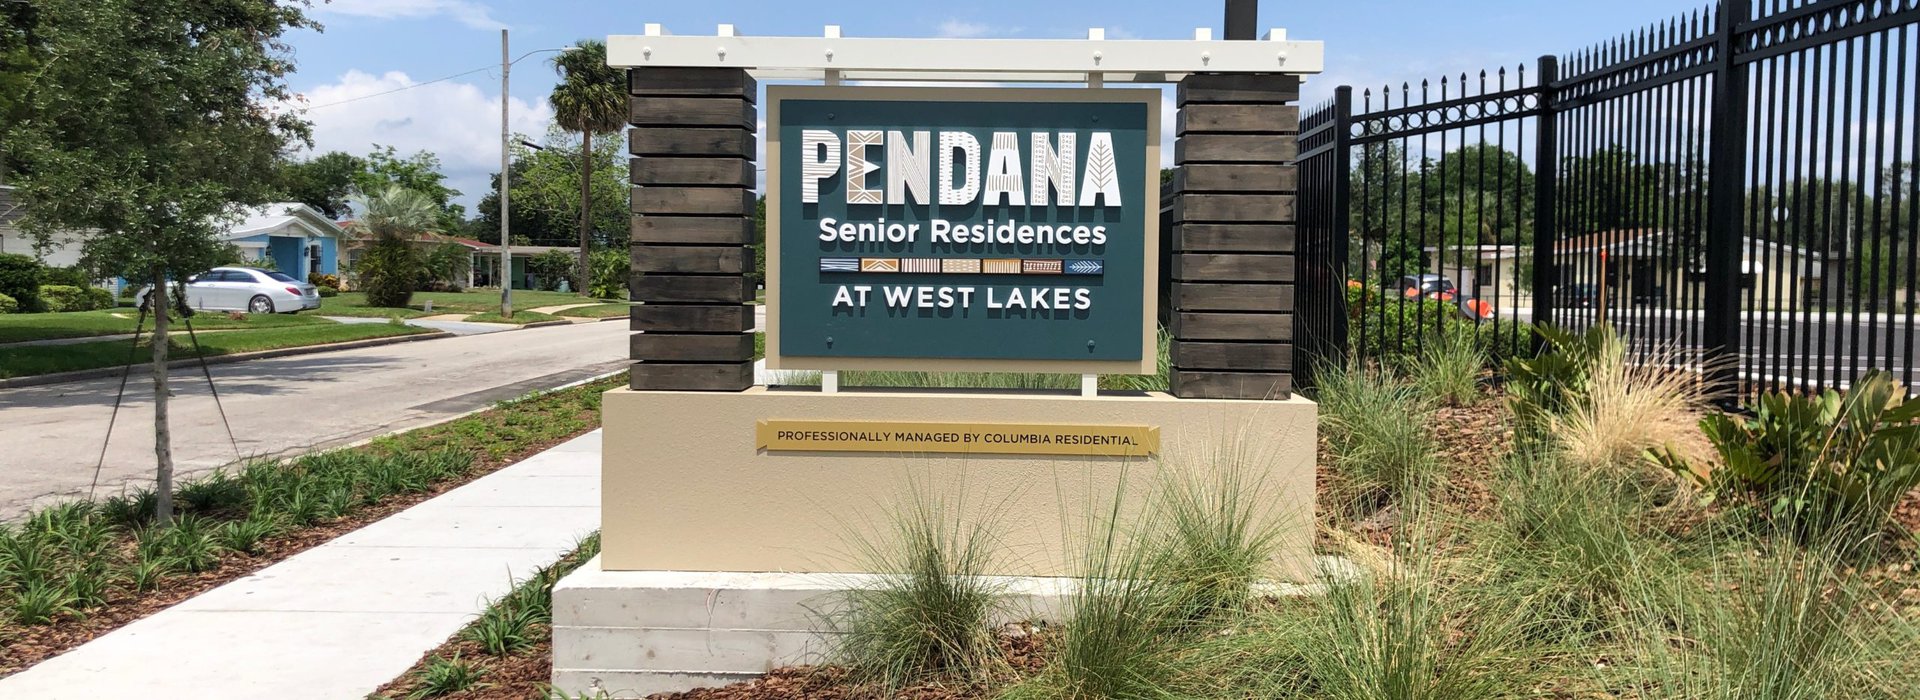 pendana orlando seniors apartments sign scaled